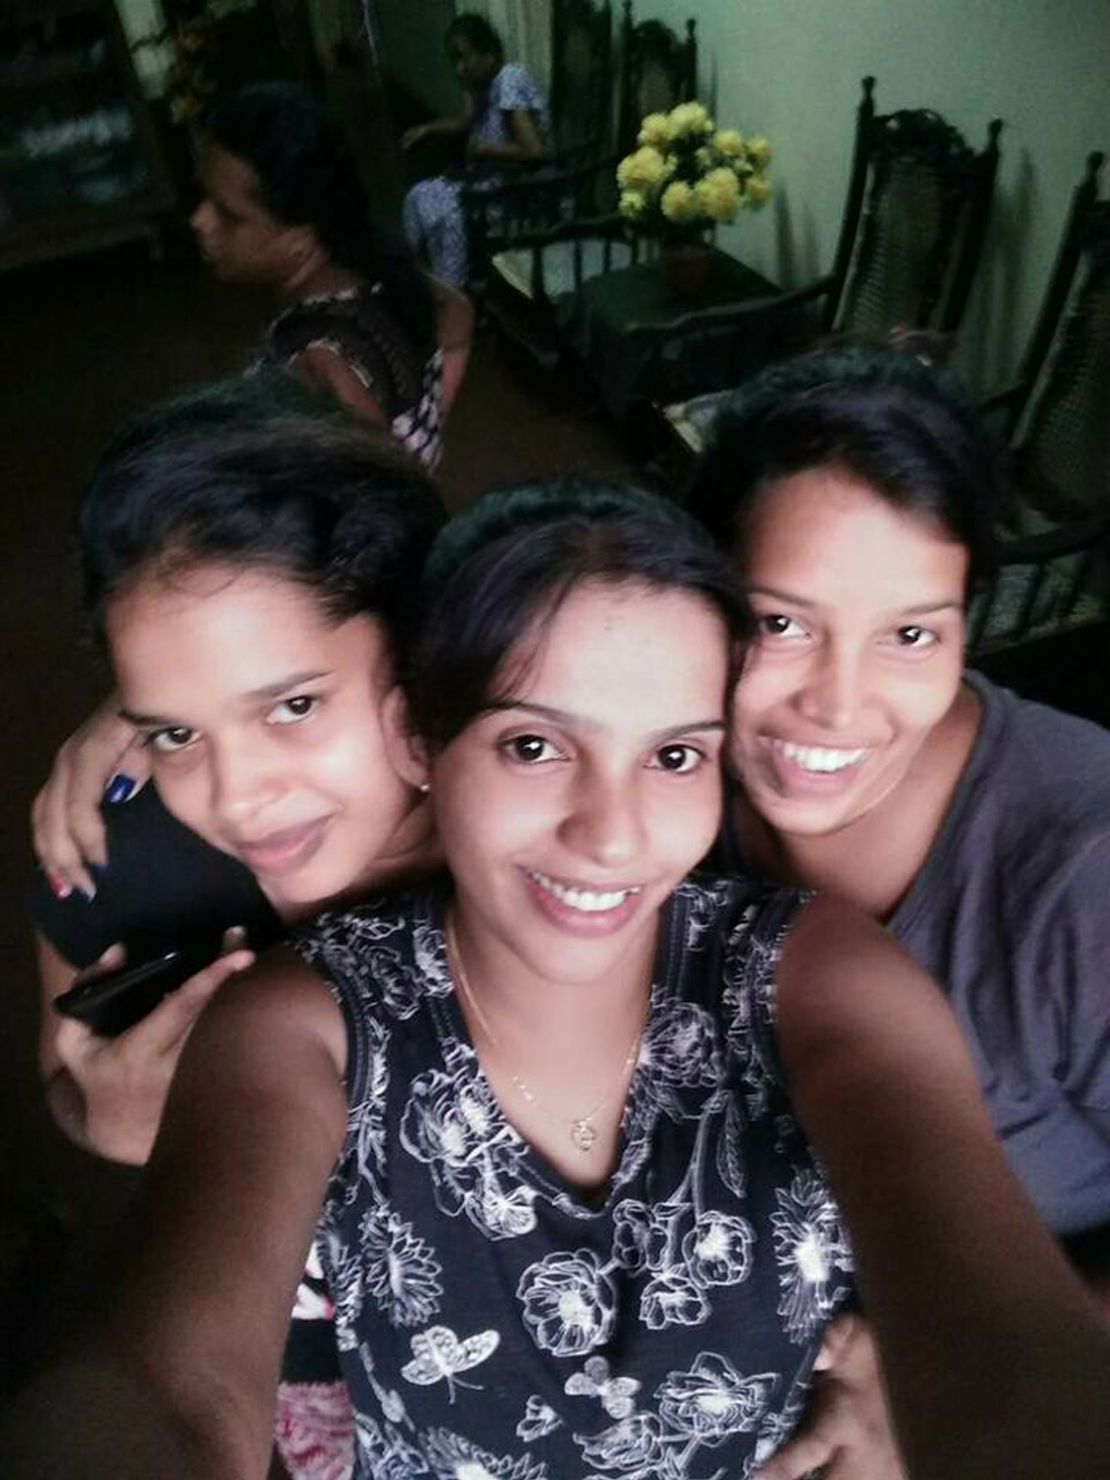 Wishma Rathnayake (center) with her younger sisters, Poornima Rathnayake (left) and Wayomi Rathnayake (right).